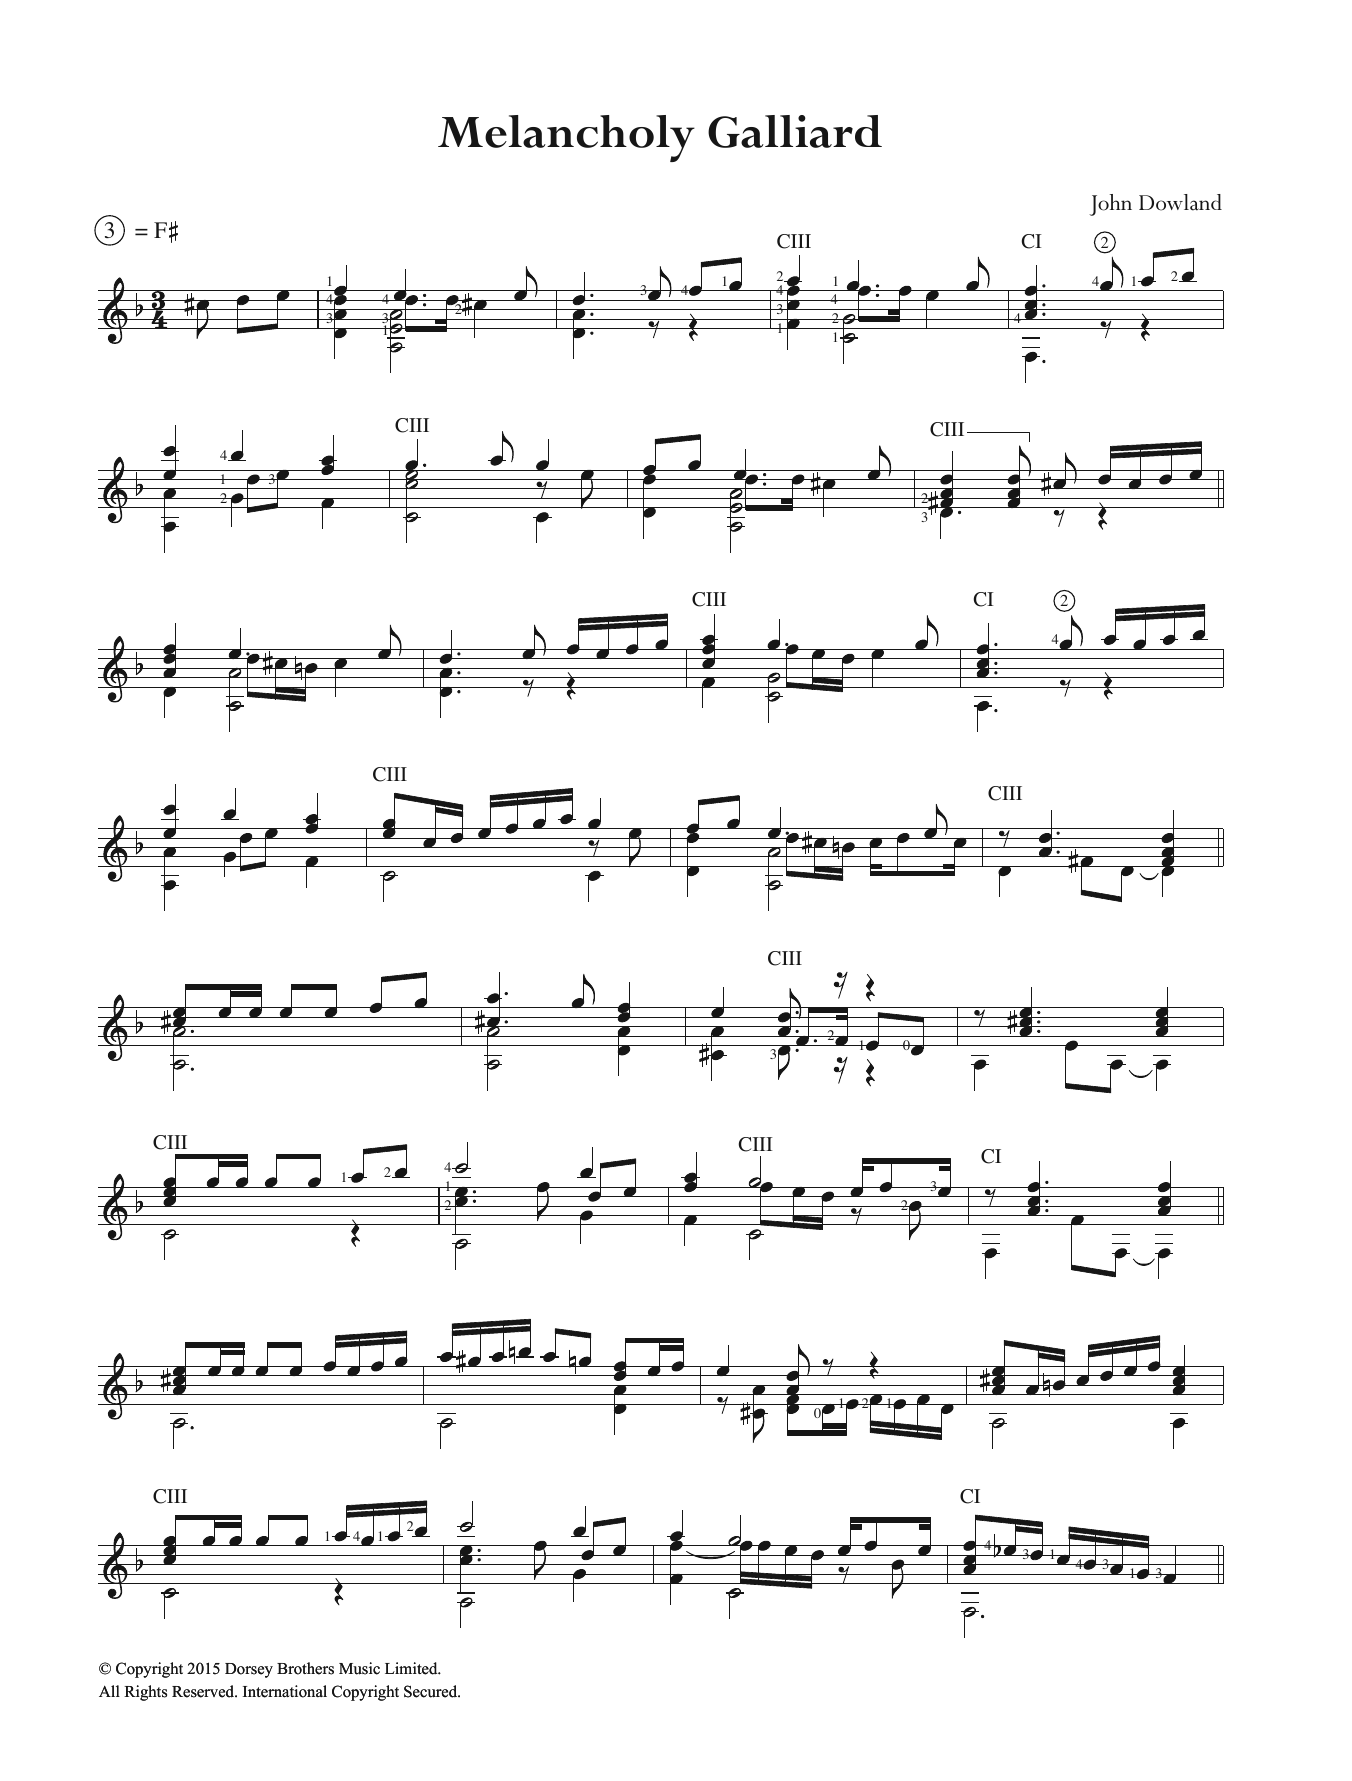 John Dowland Melancholy Galliard Sheet Music Notes & Chords for Guitar - Download or Print PDF